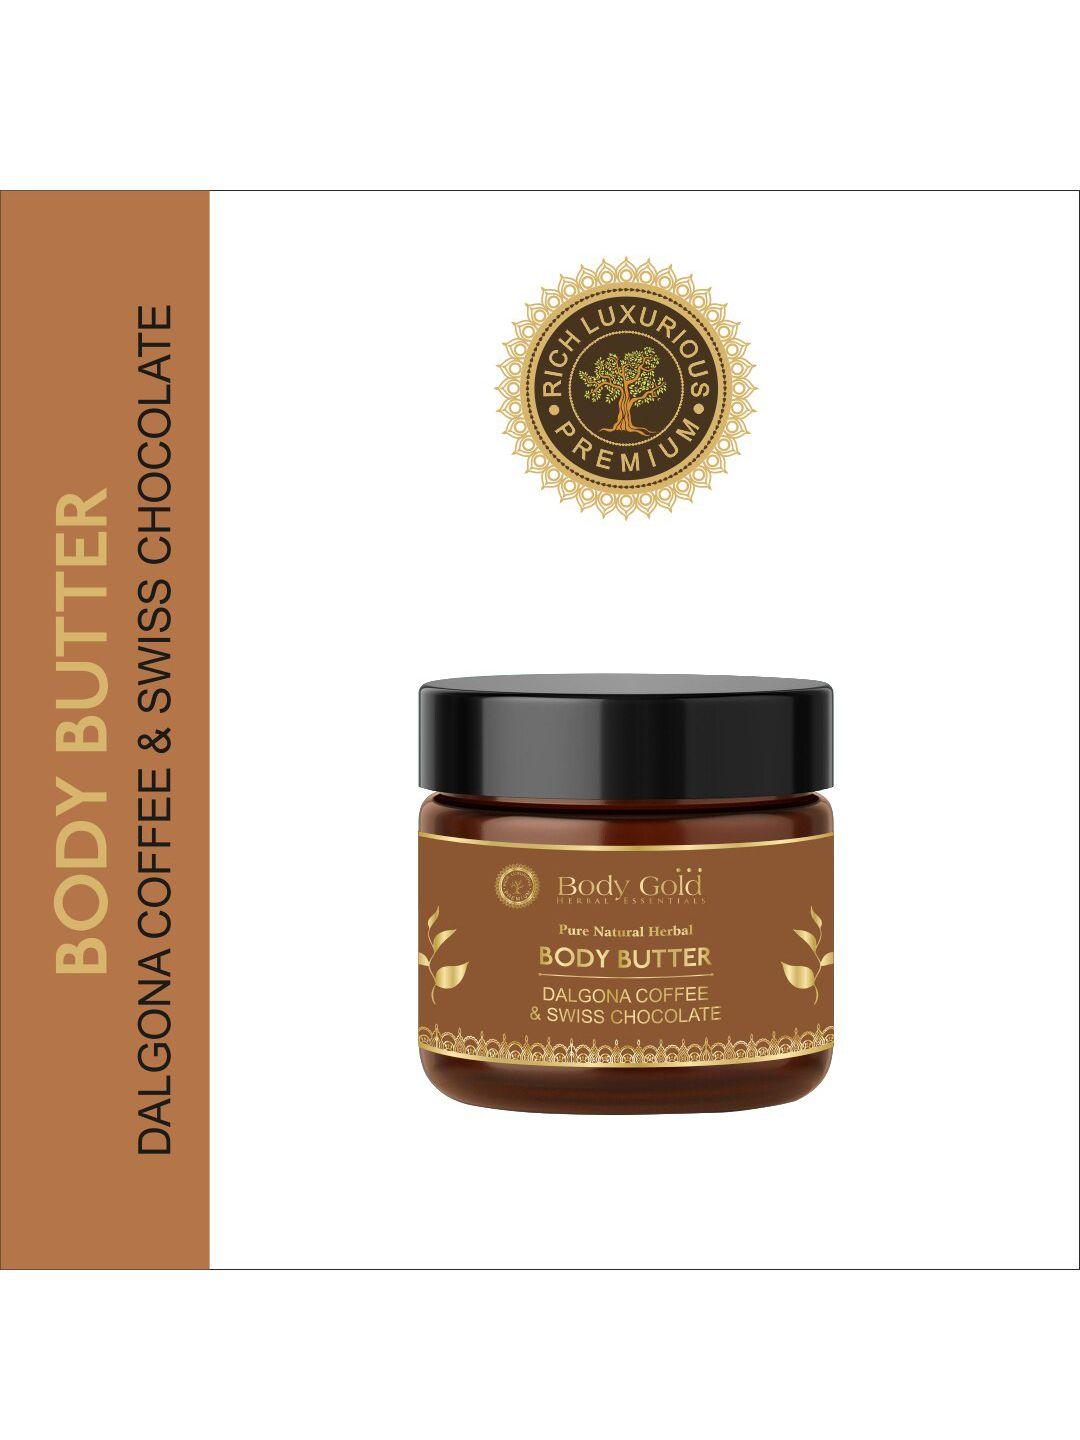 body gold pure natural herbal dalgona coffee & swiss chocolate body butter cream 100 gm